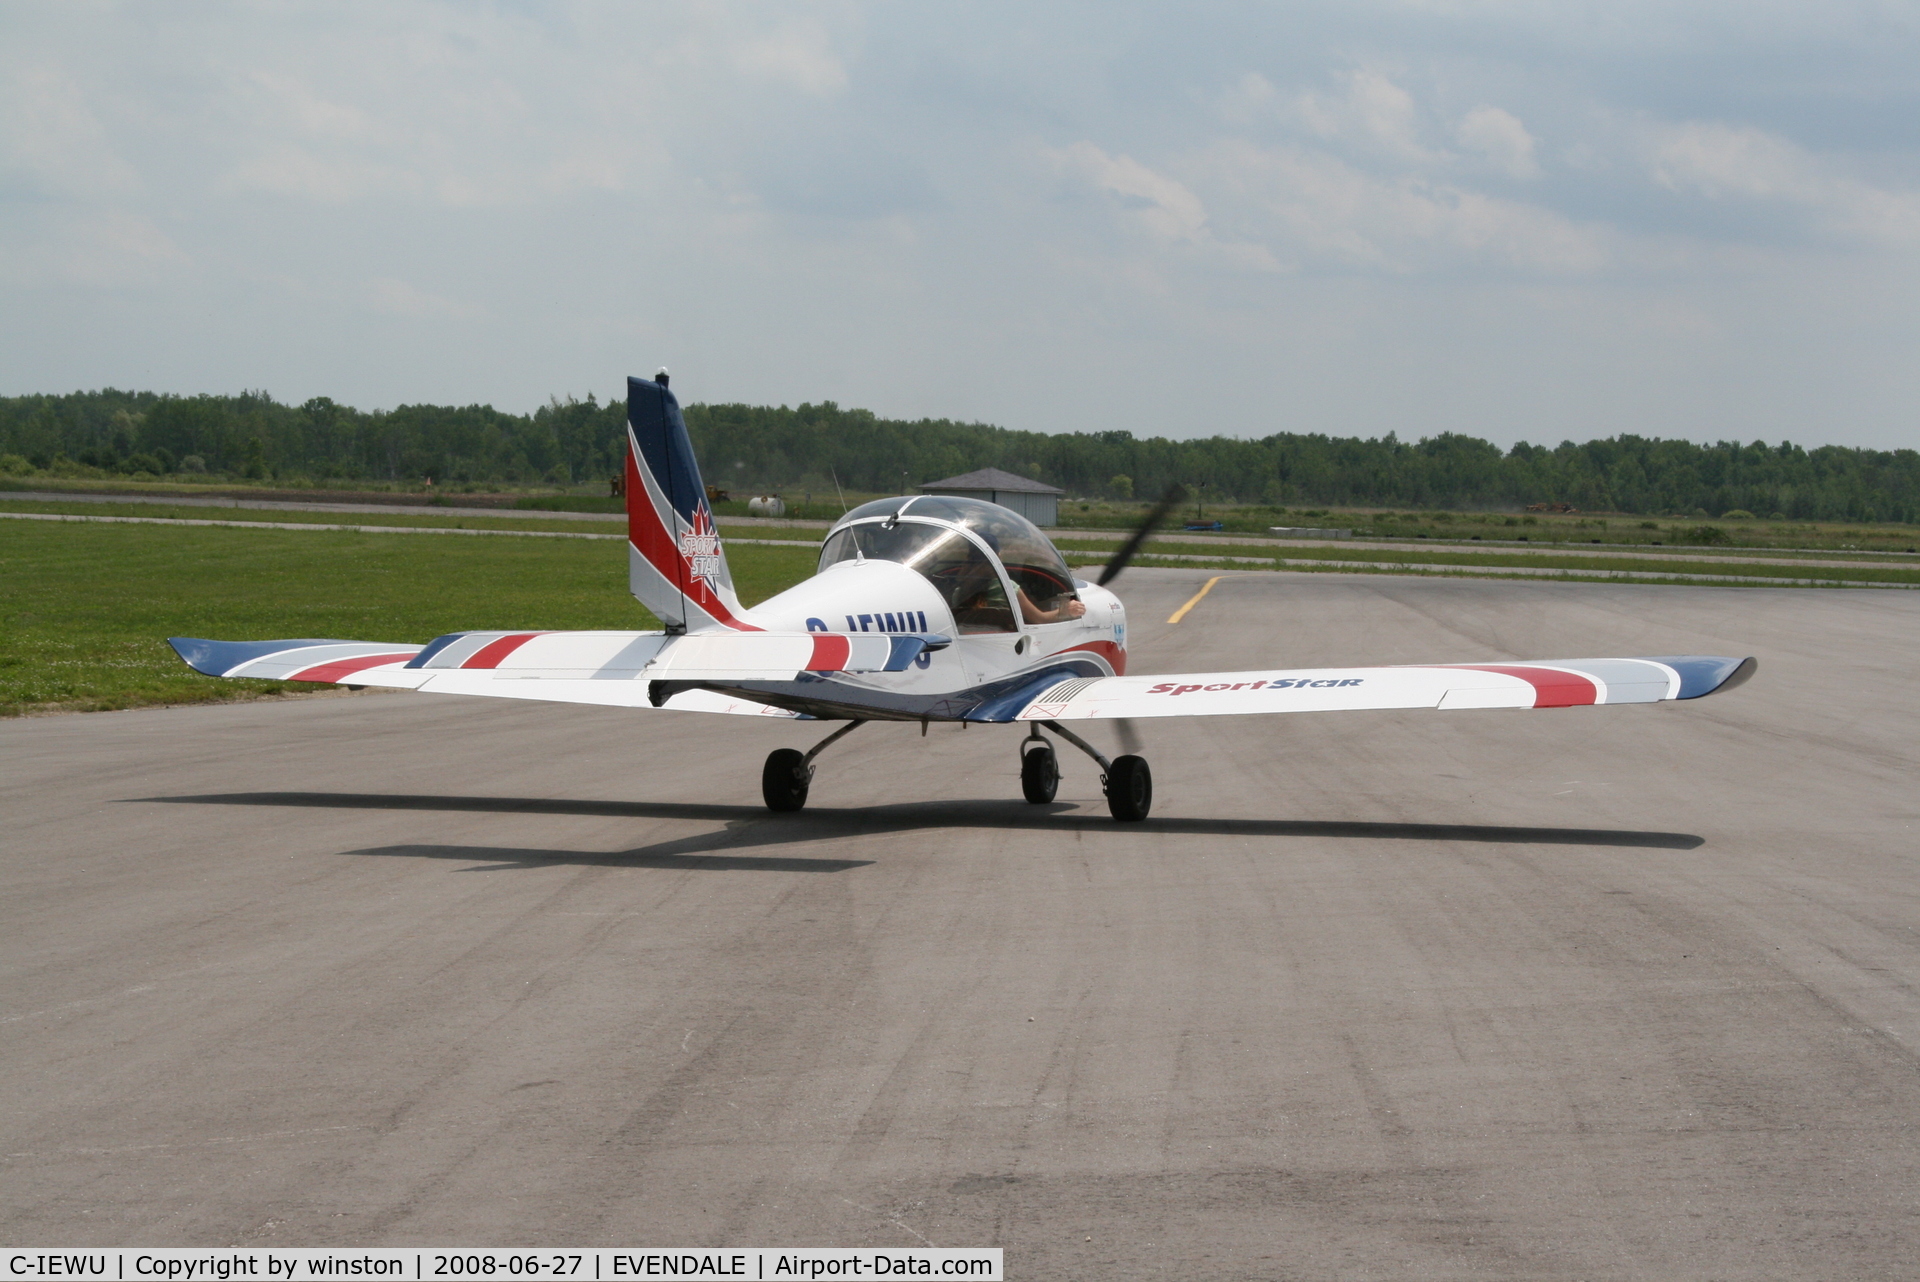 C-IEWU, 2005 Aerotechnik SPORTSTAR C/N 20050405, Shortly before take-off